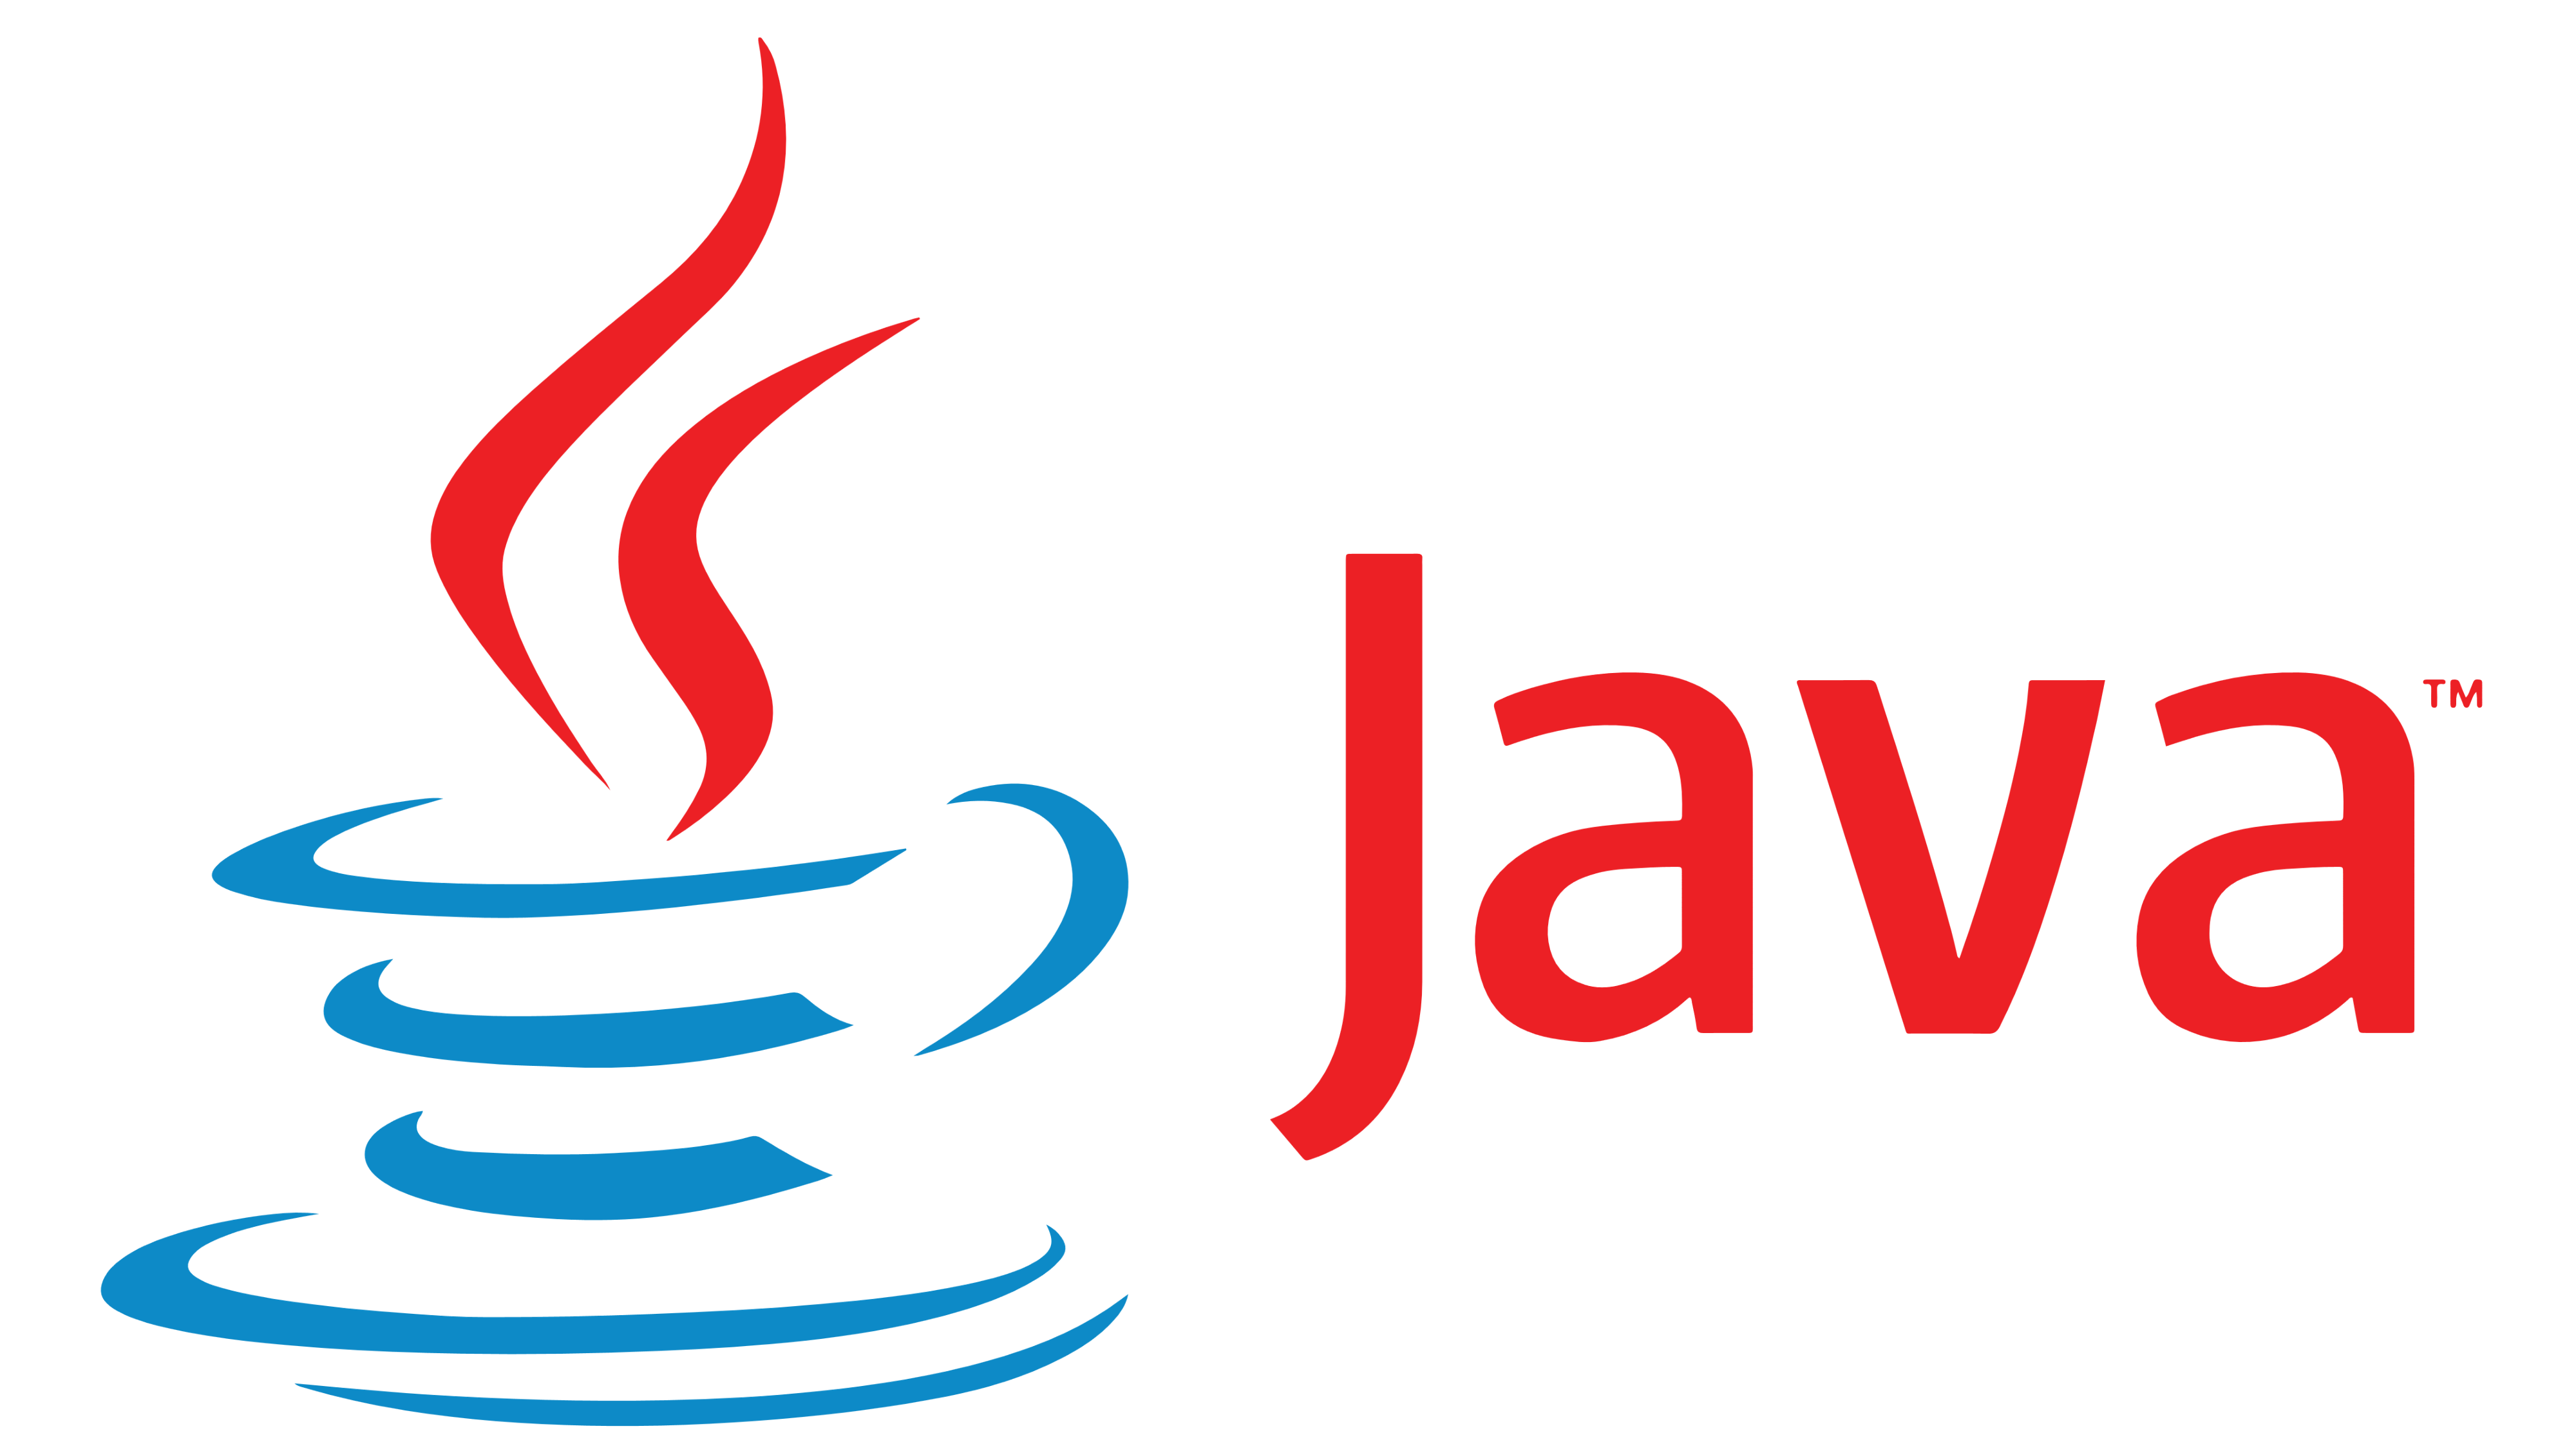 Java Object Oriented Programming